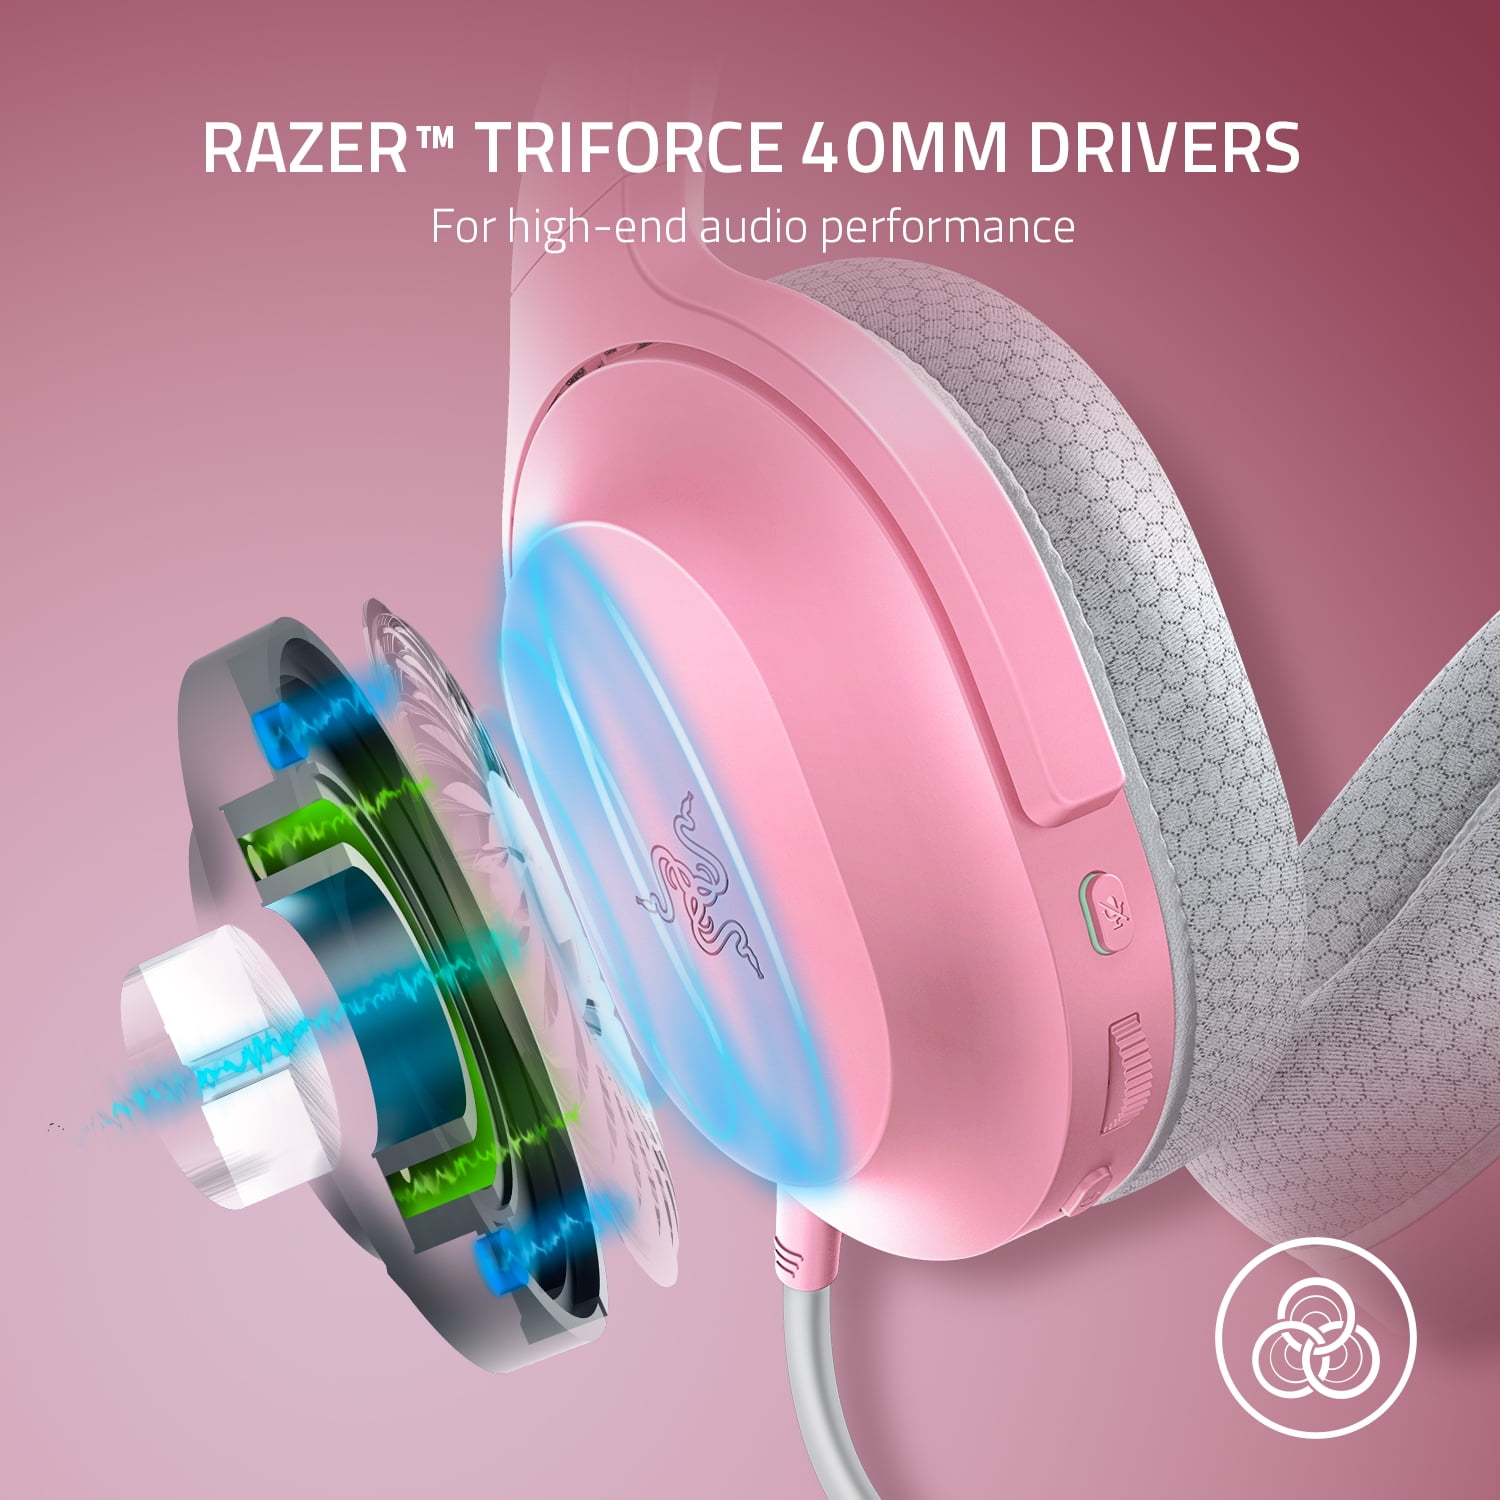 Buy Razer Barracuda X Quartz Pink Wireless Gaming Headset, Store